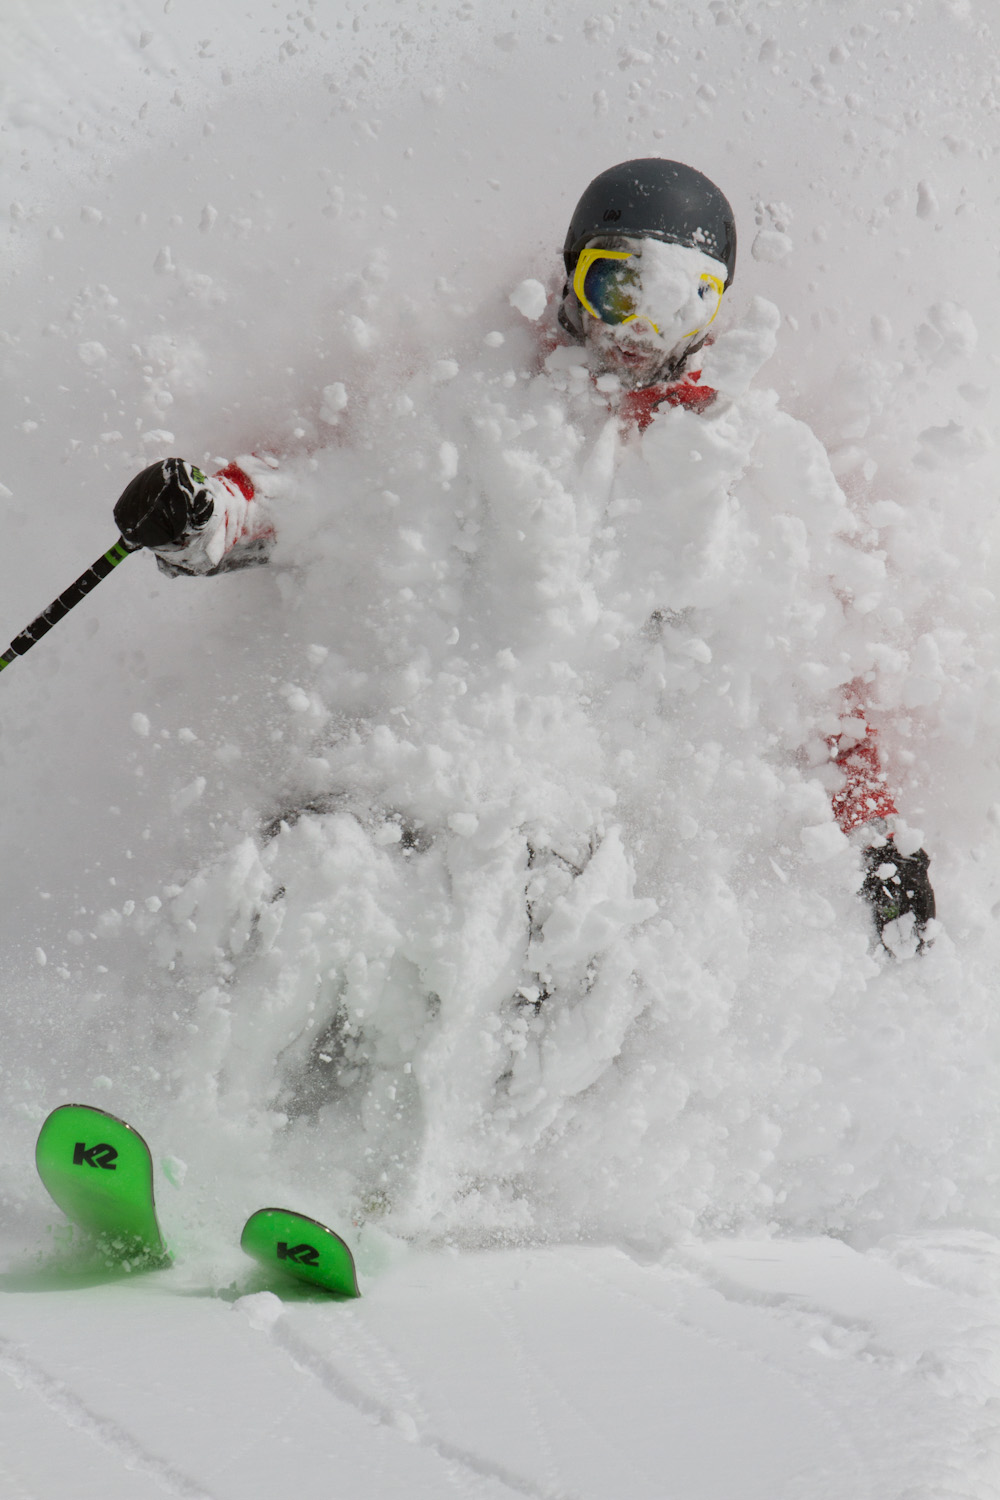 Andy Mahre blasts through deep Japanese powder at Hakuba Cortina ski area.